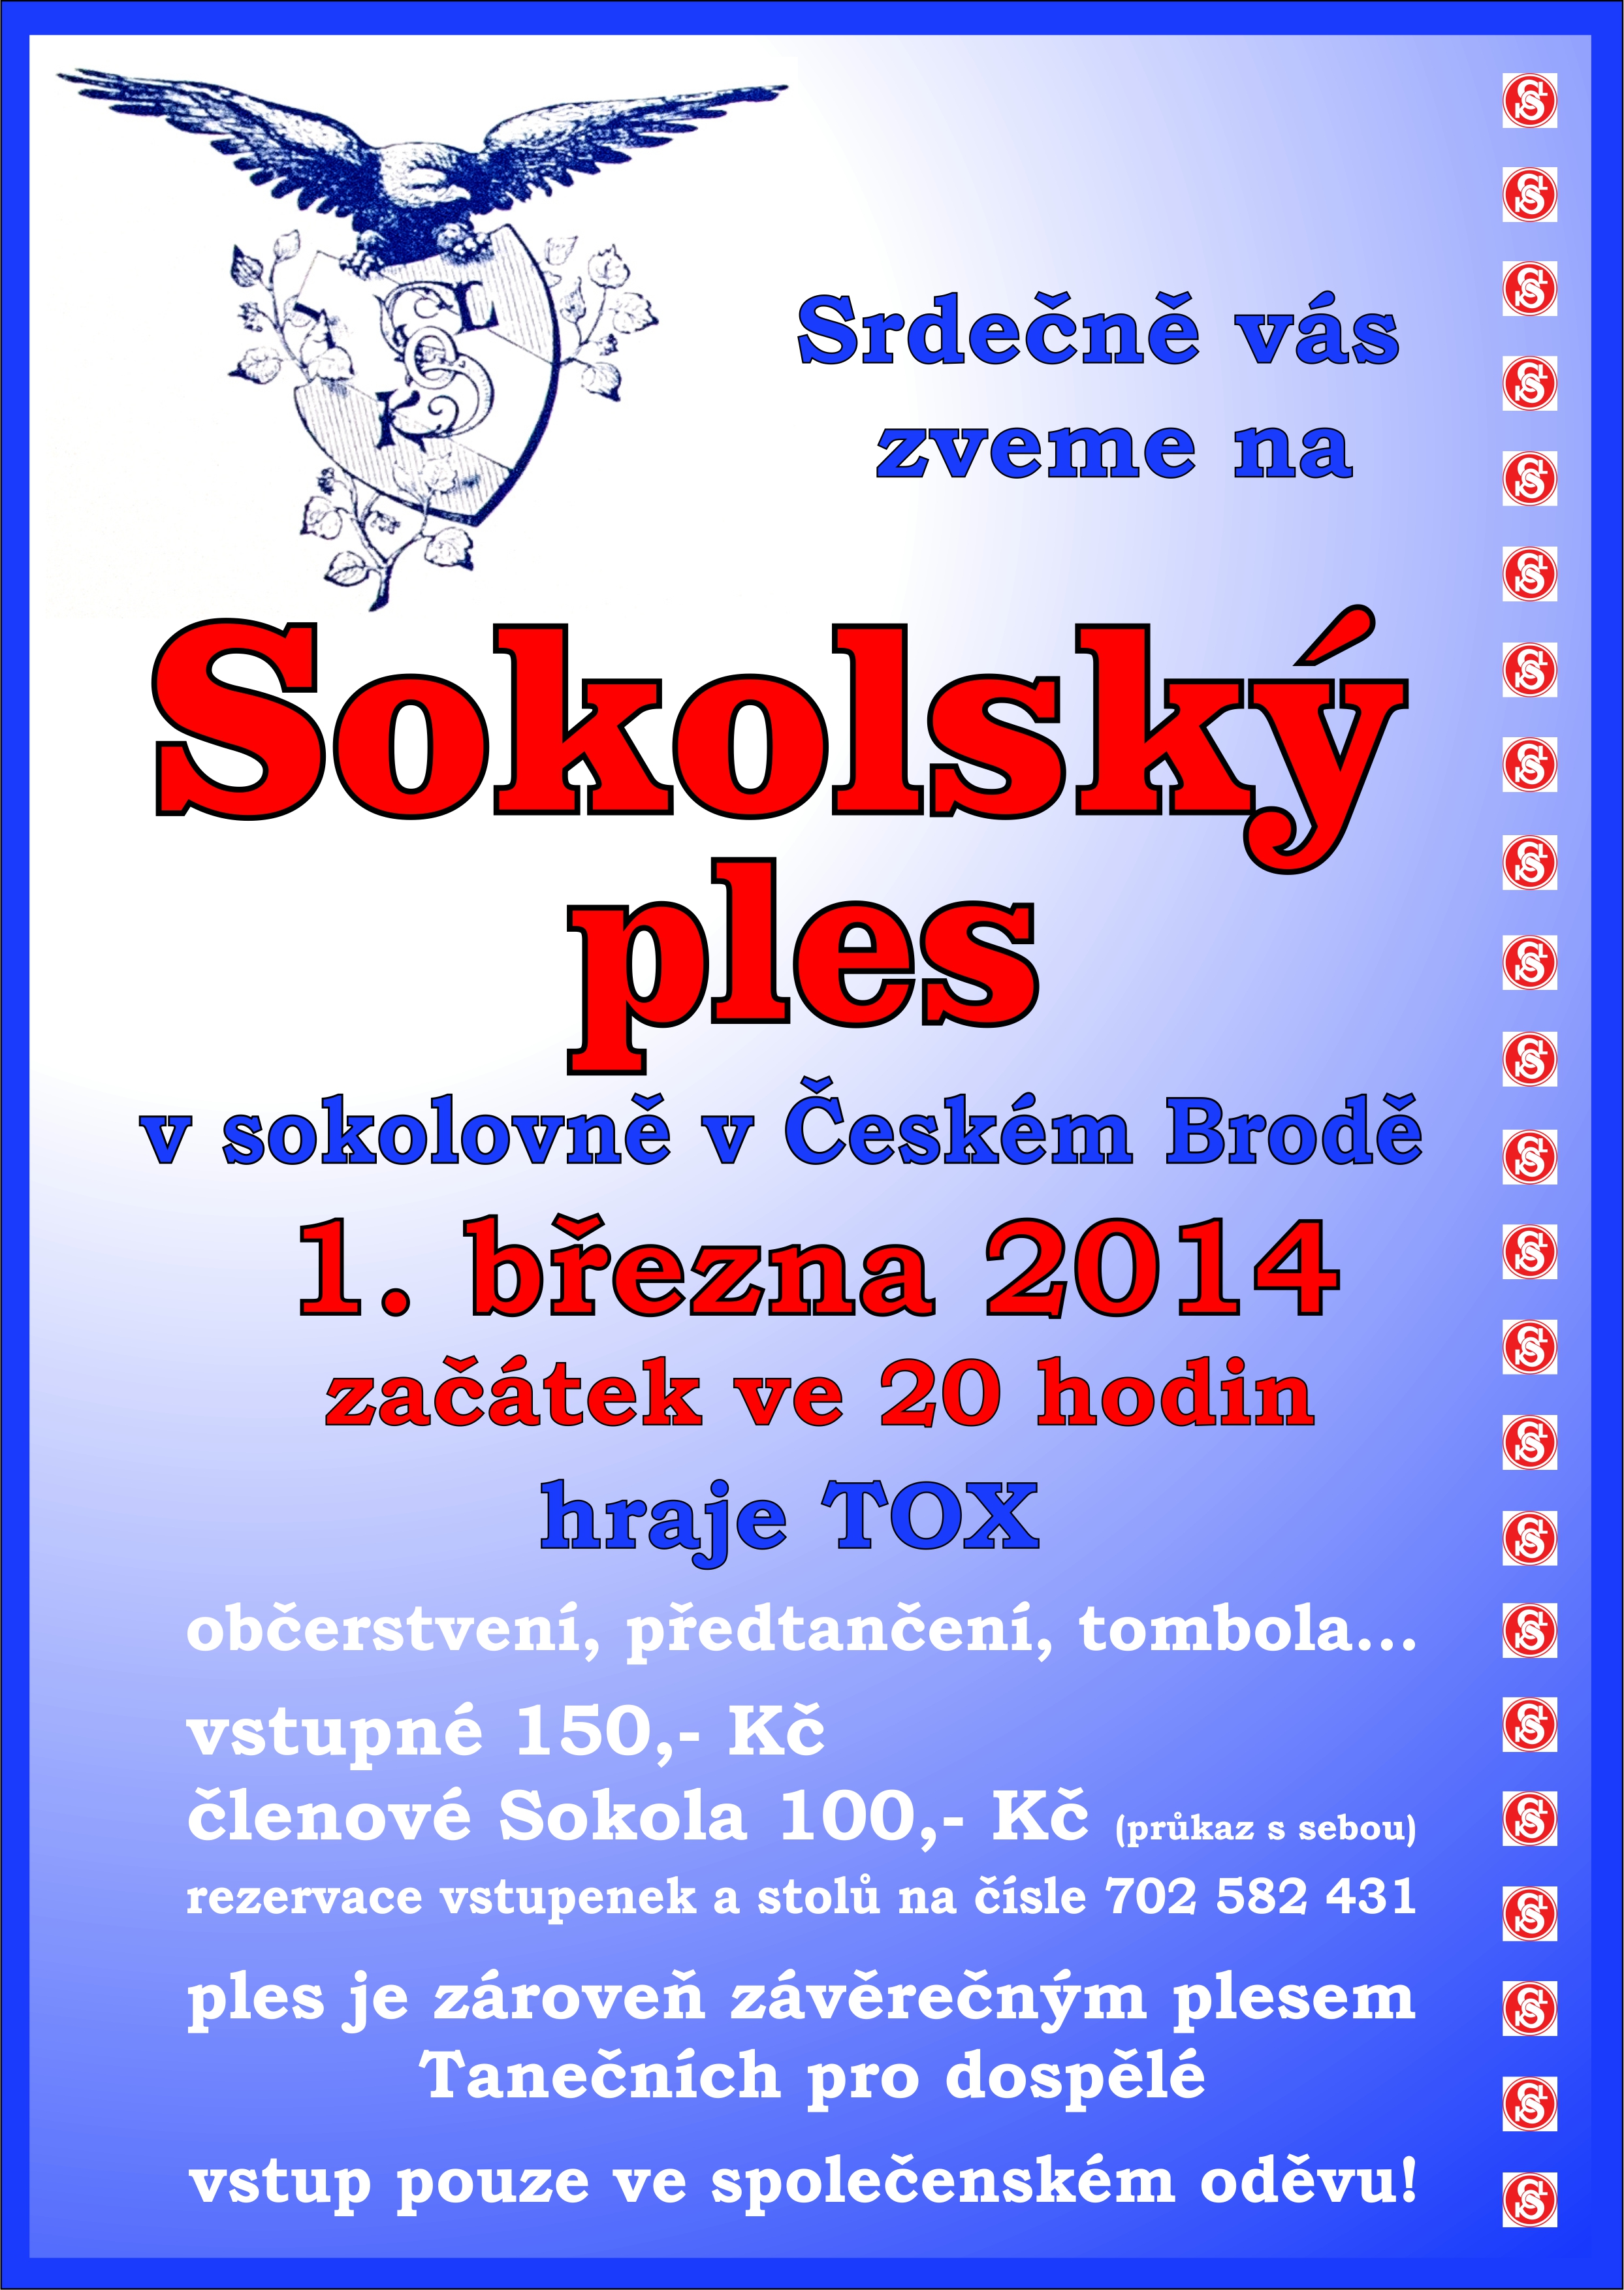 http://sokolbrod.cz/wp-content/uploads/2014/01/Sokolsk%C3%BD-ples-2014-2.jpg